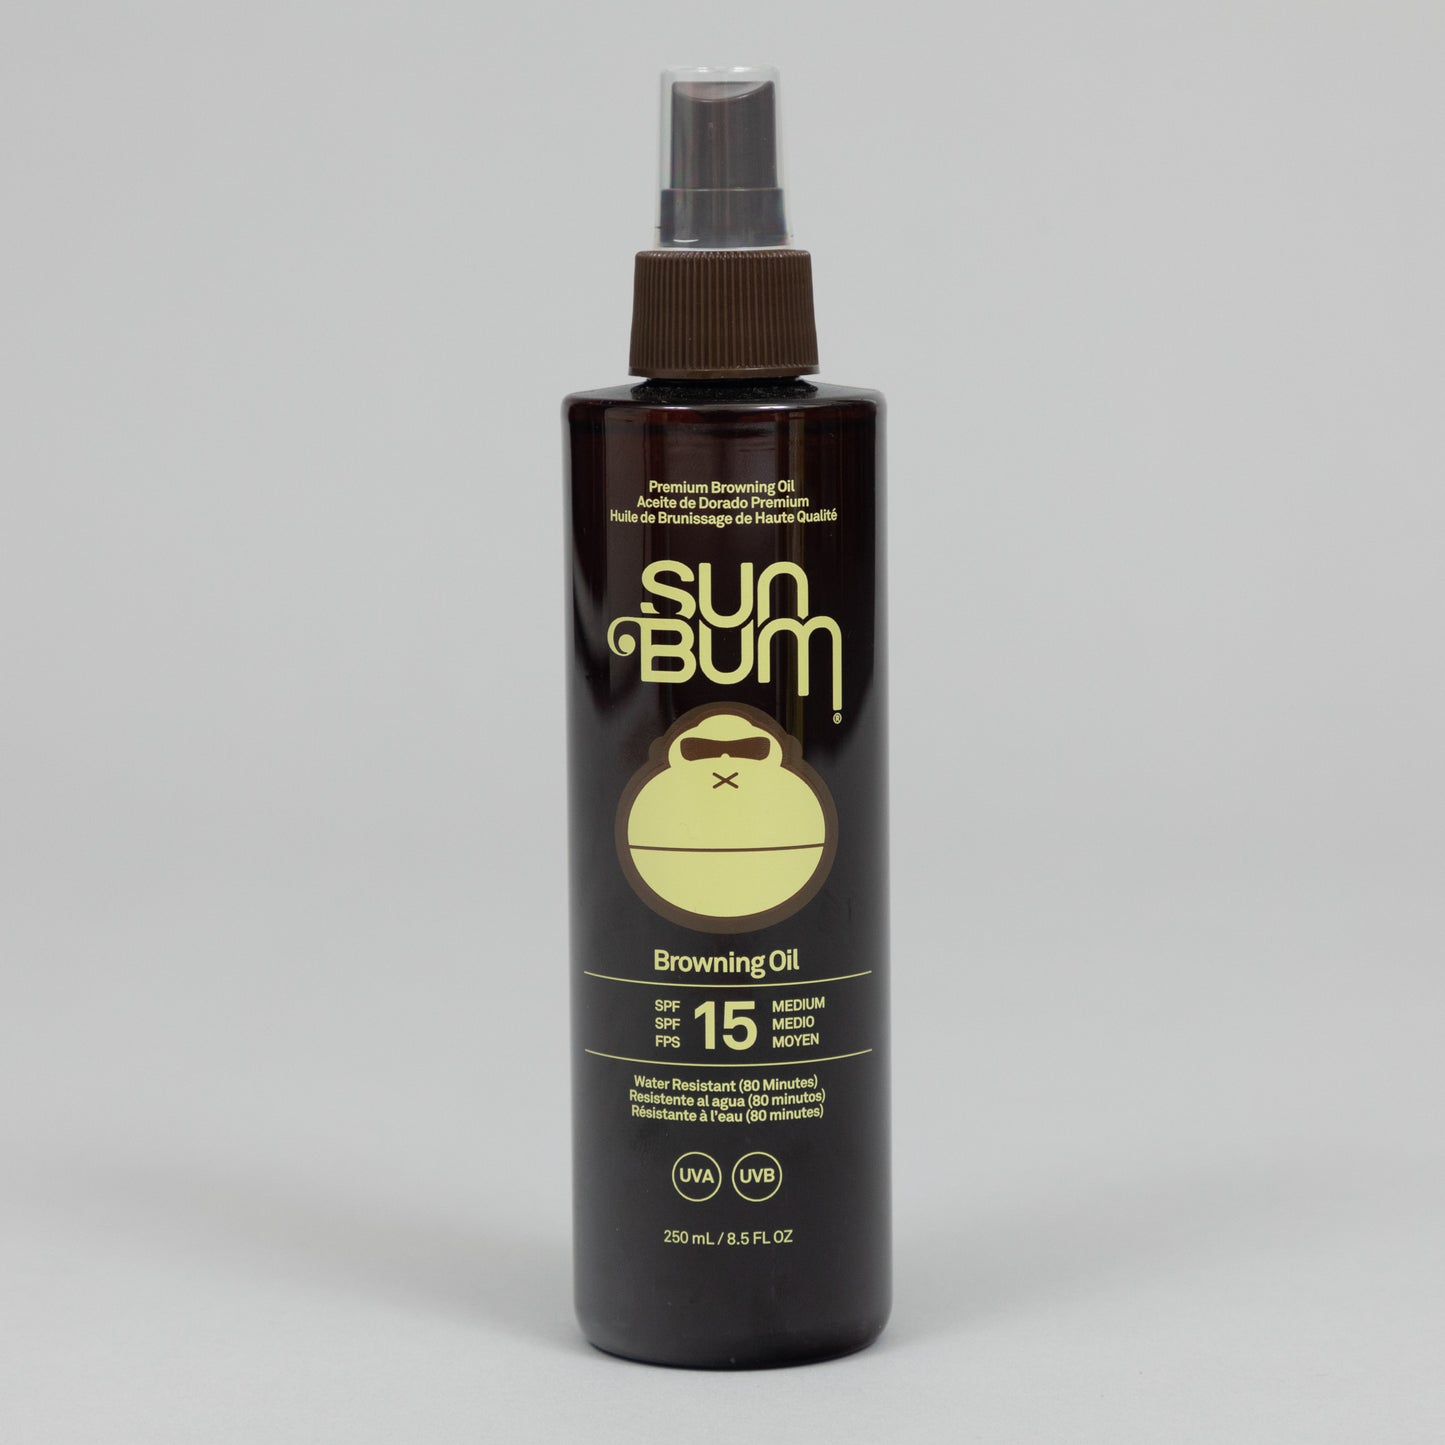 SUN BUM SPF 15 Browning Oil (250ml)